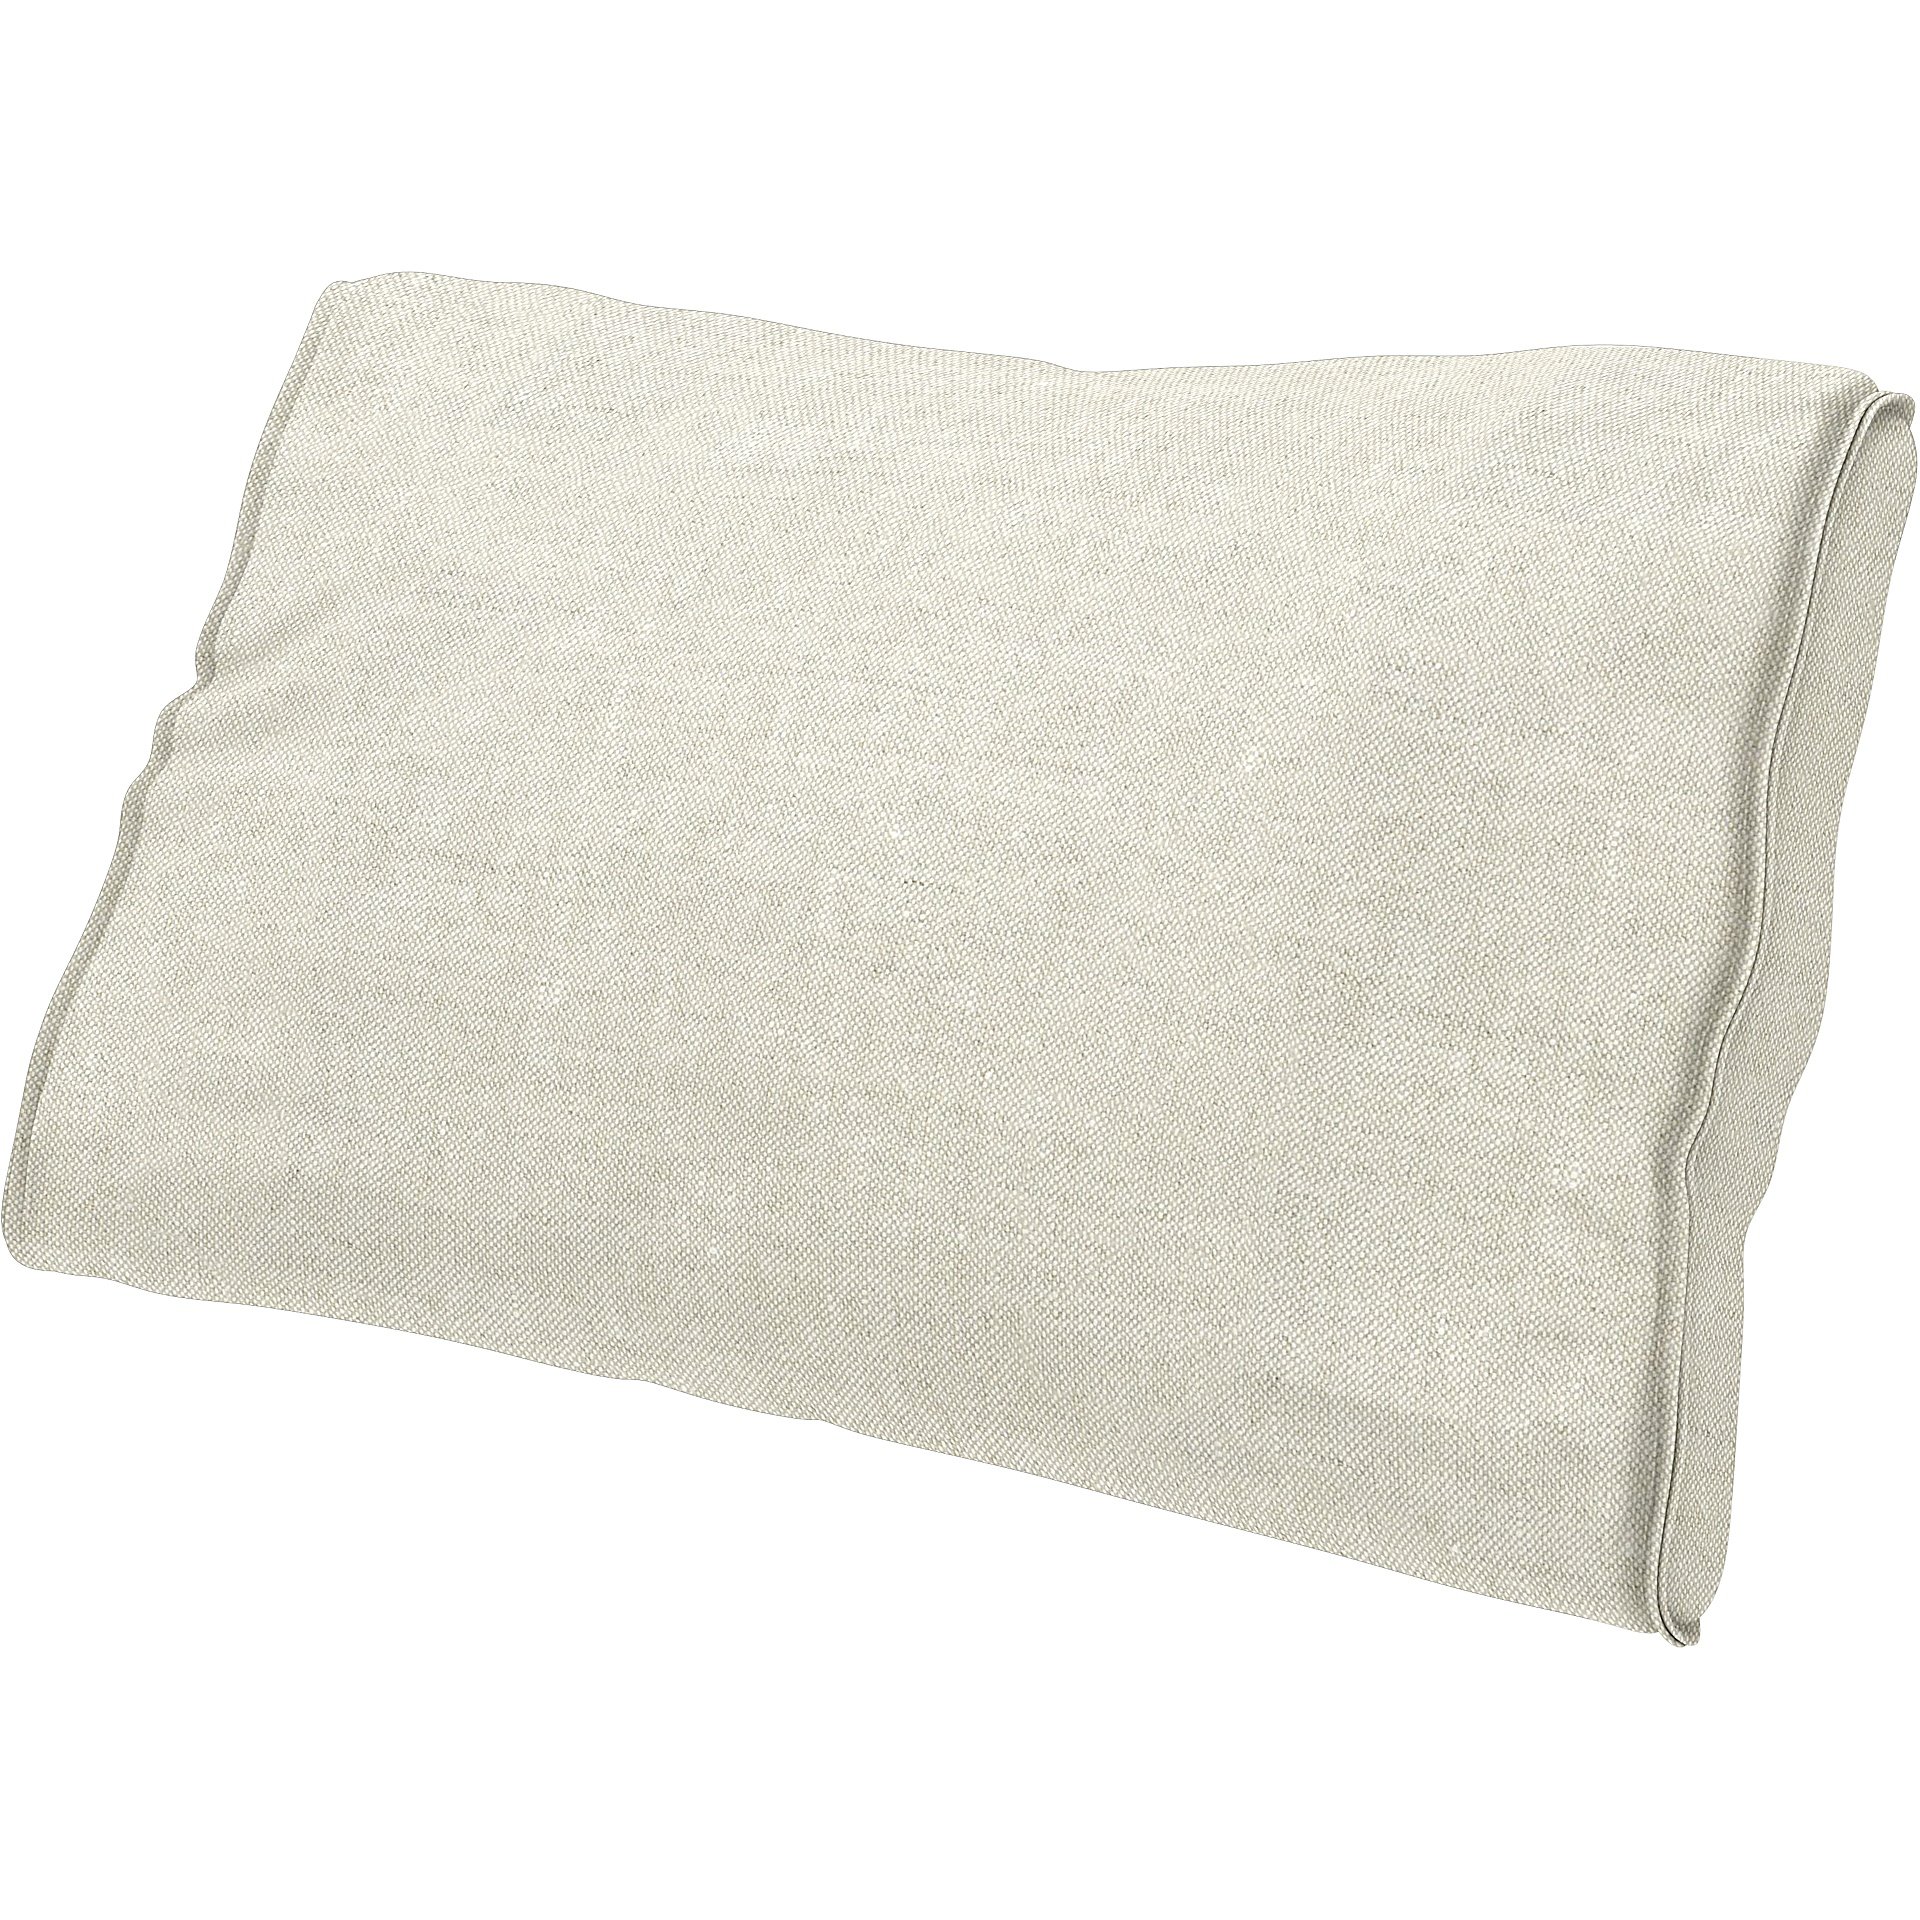 IKEA - Lumbar cushion cover Farlov Loose fit, Natural, Linen - Bemz